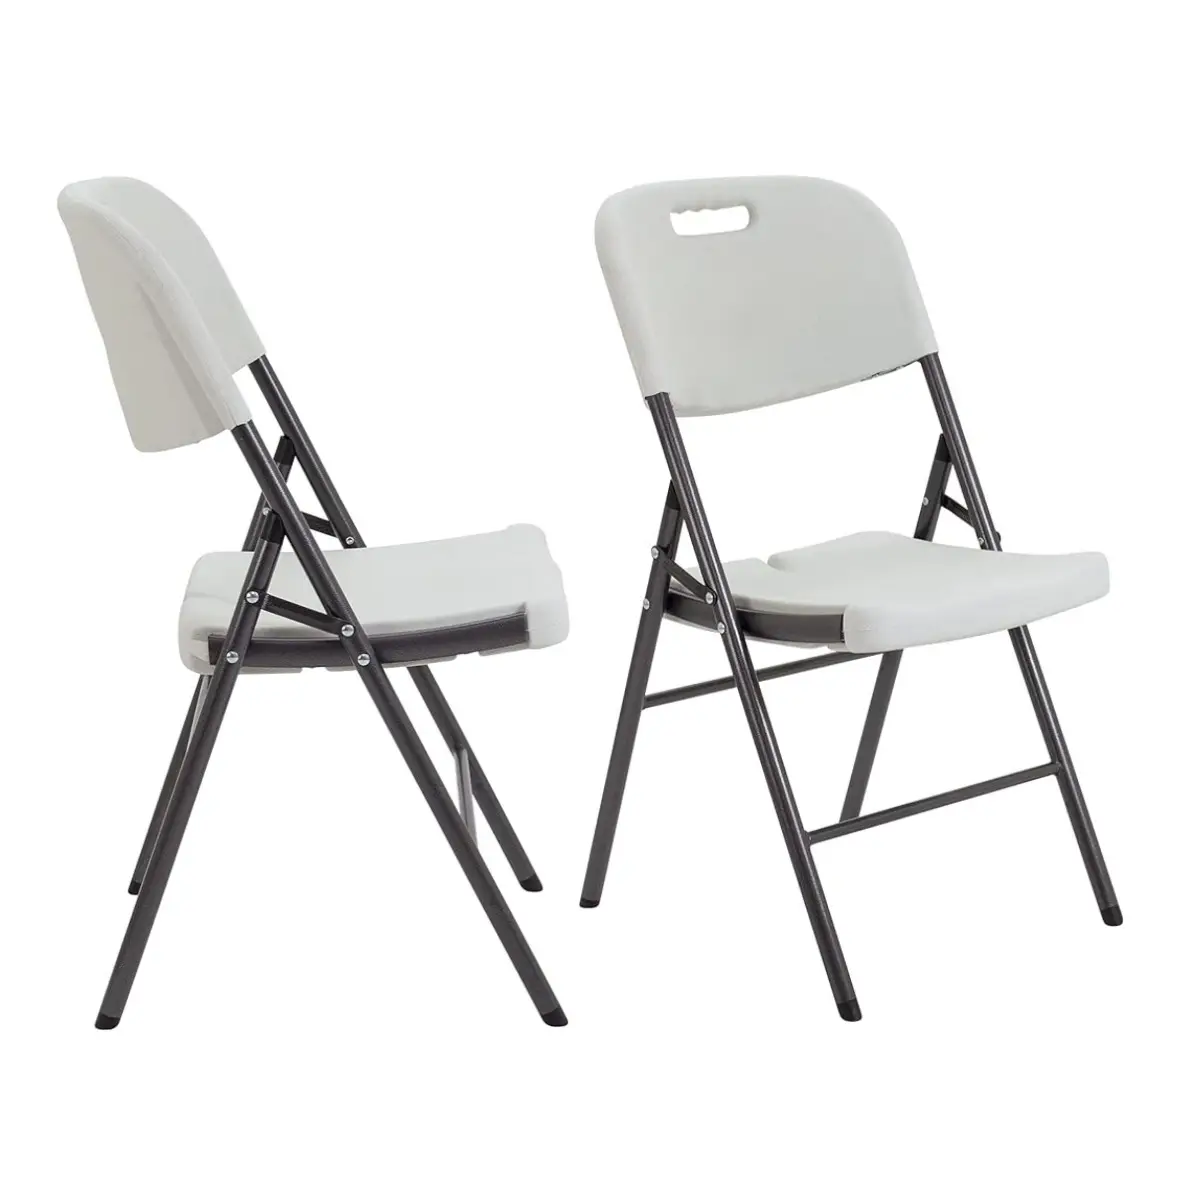 Table pliante de pique-nique en plein air portable blanc de vente chaude et ensemble de 6 chaises chaise pliante en plastique pliante de mariage moulée robuste